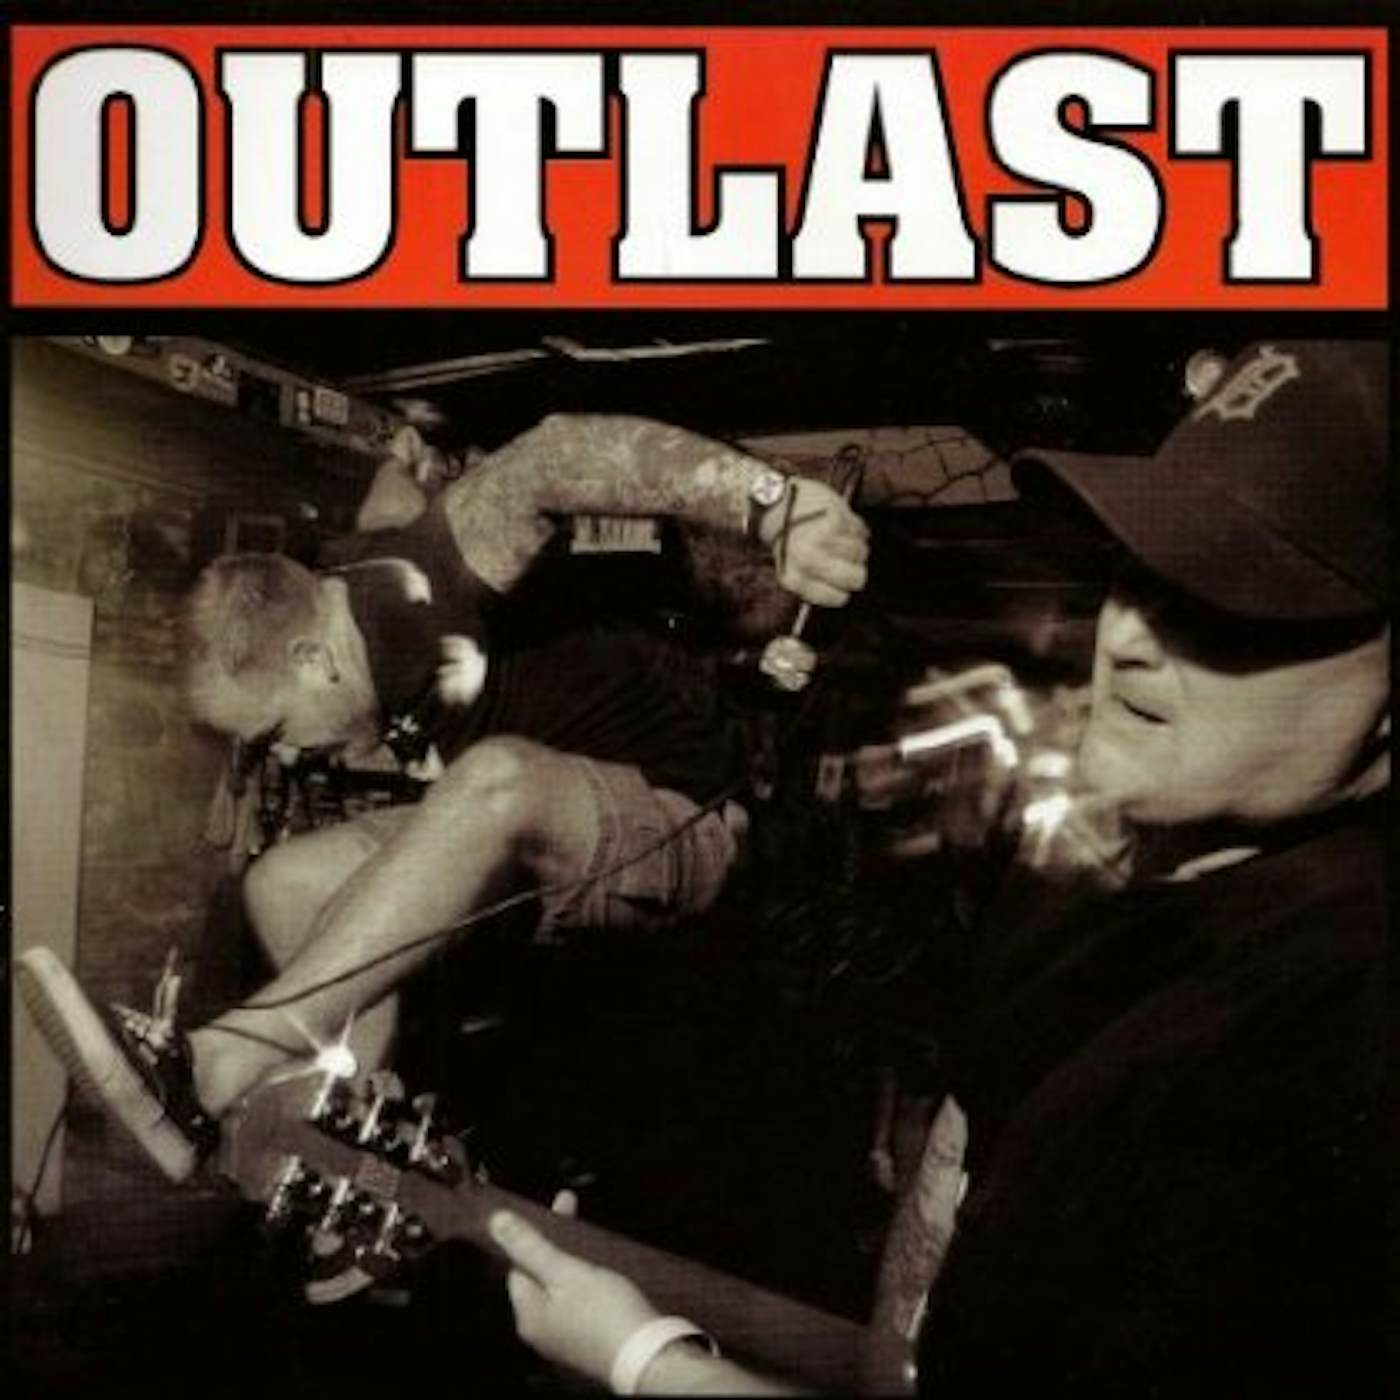 Outlast Vinyl Record